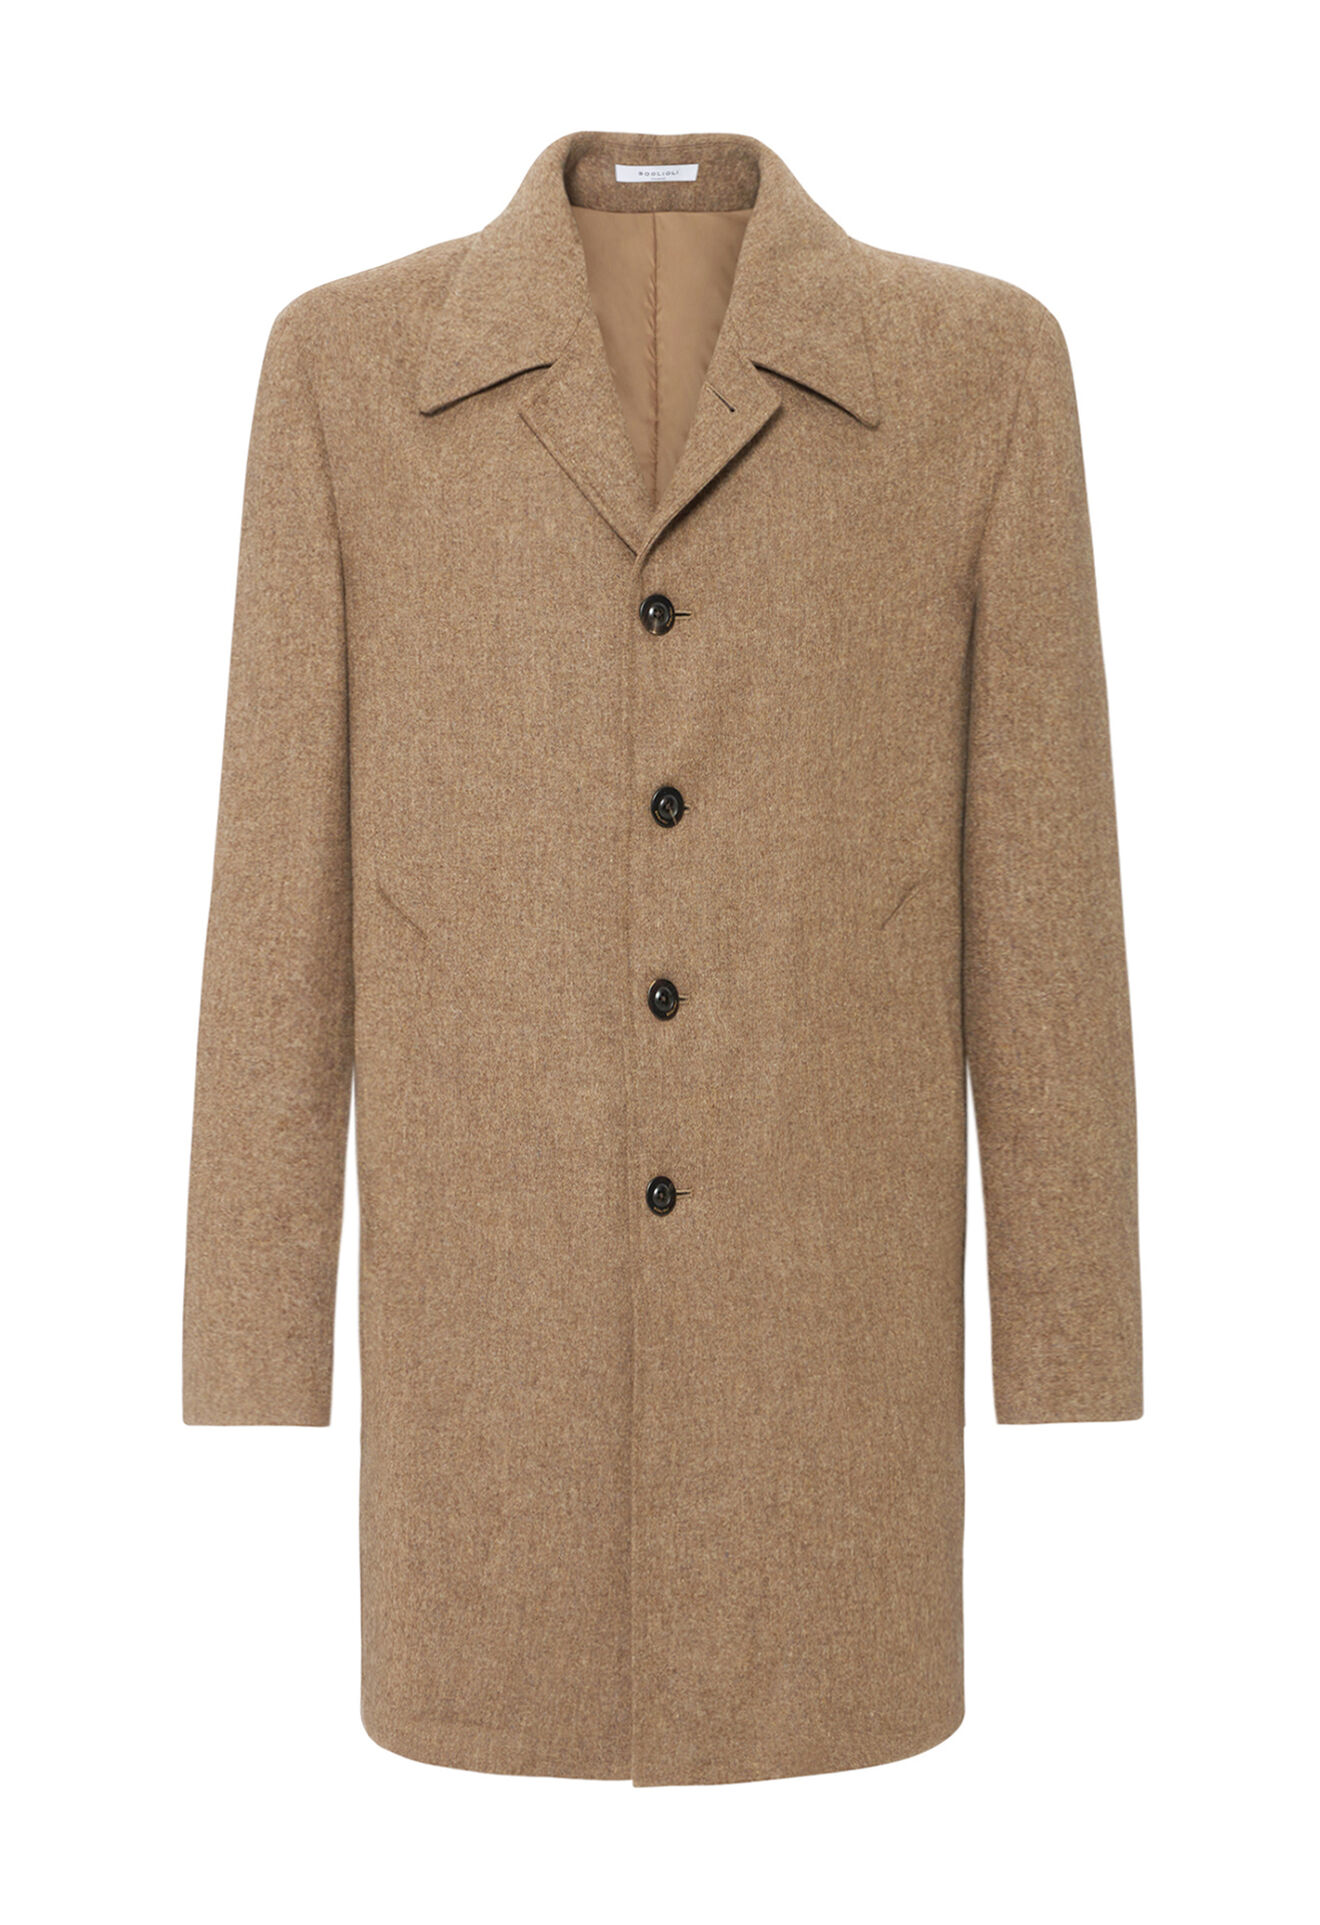 100% Virgin wool Duster coat with technical padding in Brown: Luxury  Italian Coats for Men